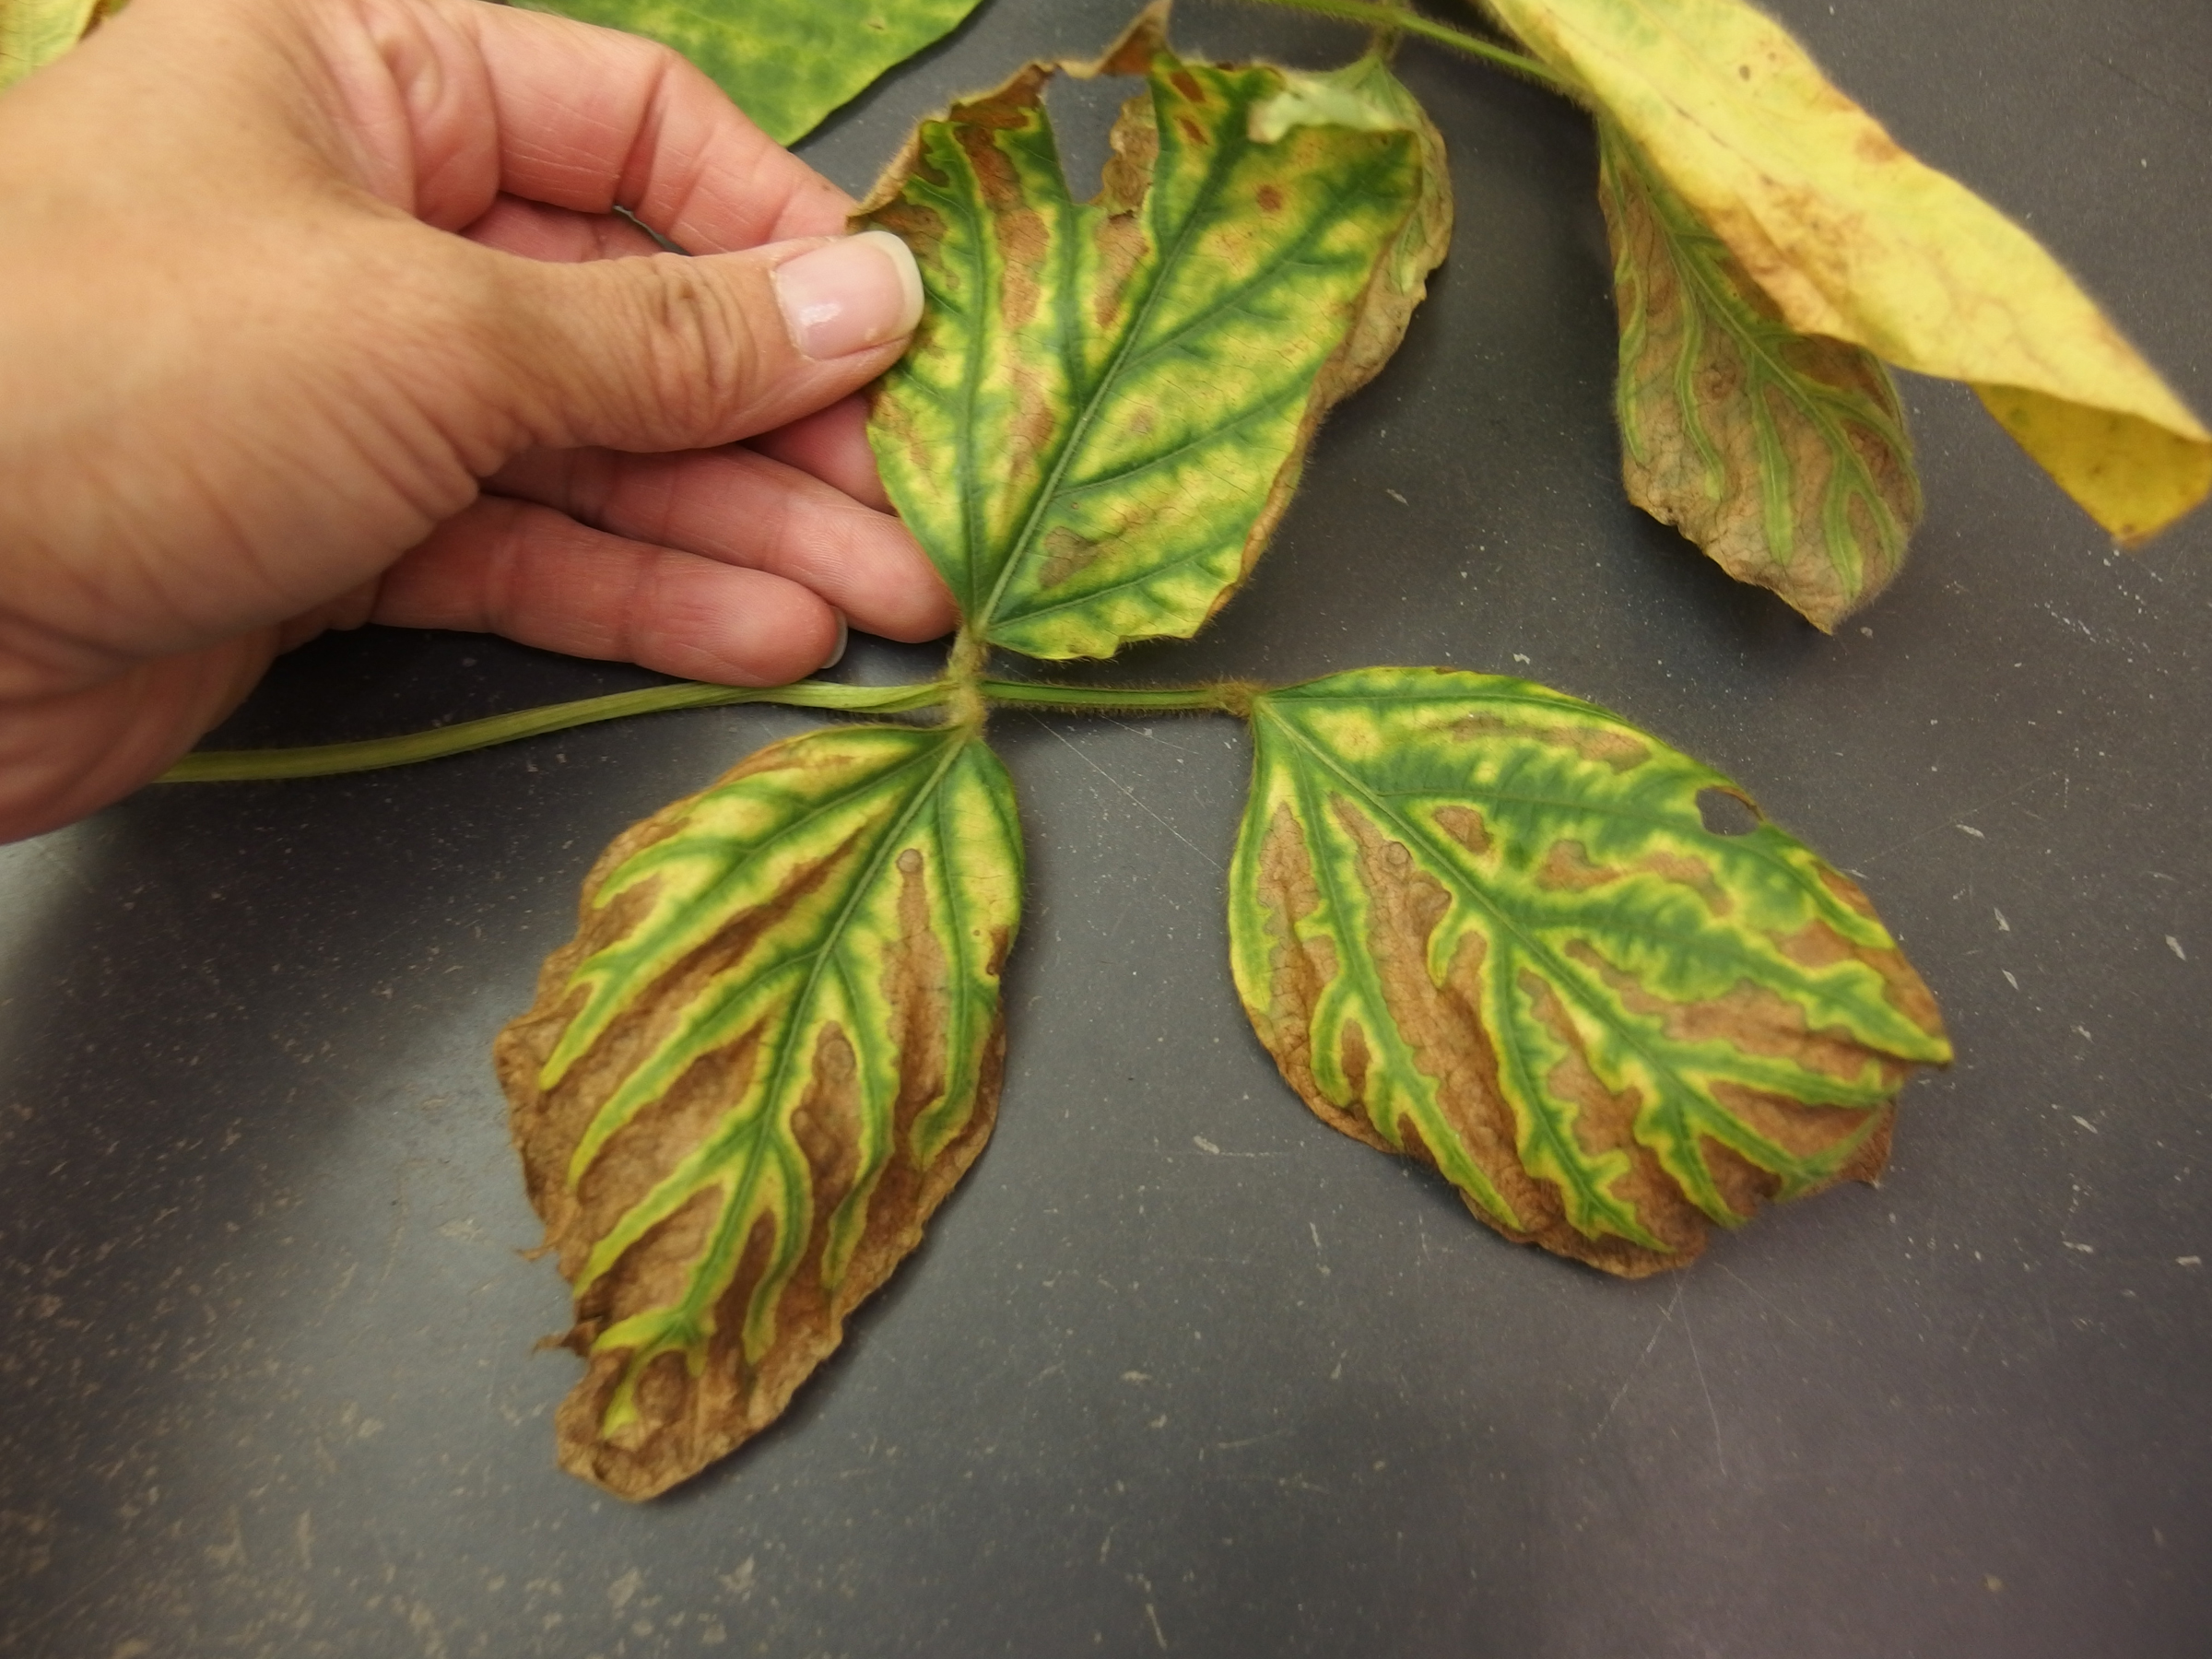 Open Foliage symptoms of sudden death syndrome in soybean. MU Plant Diagnostic Clinic.